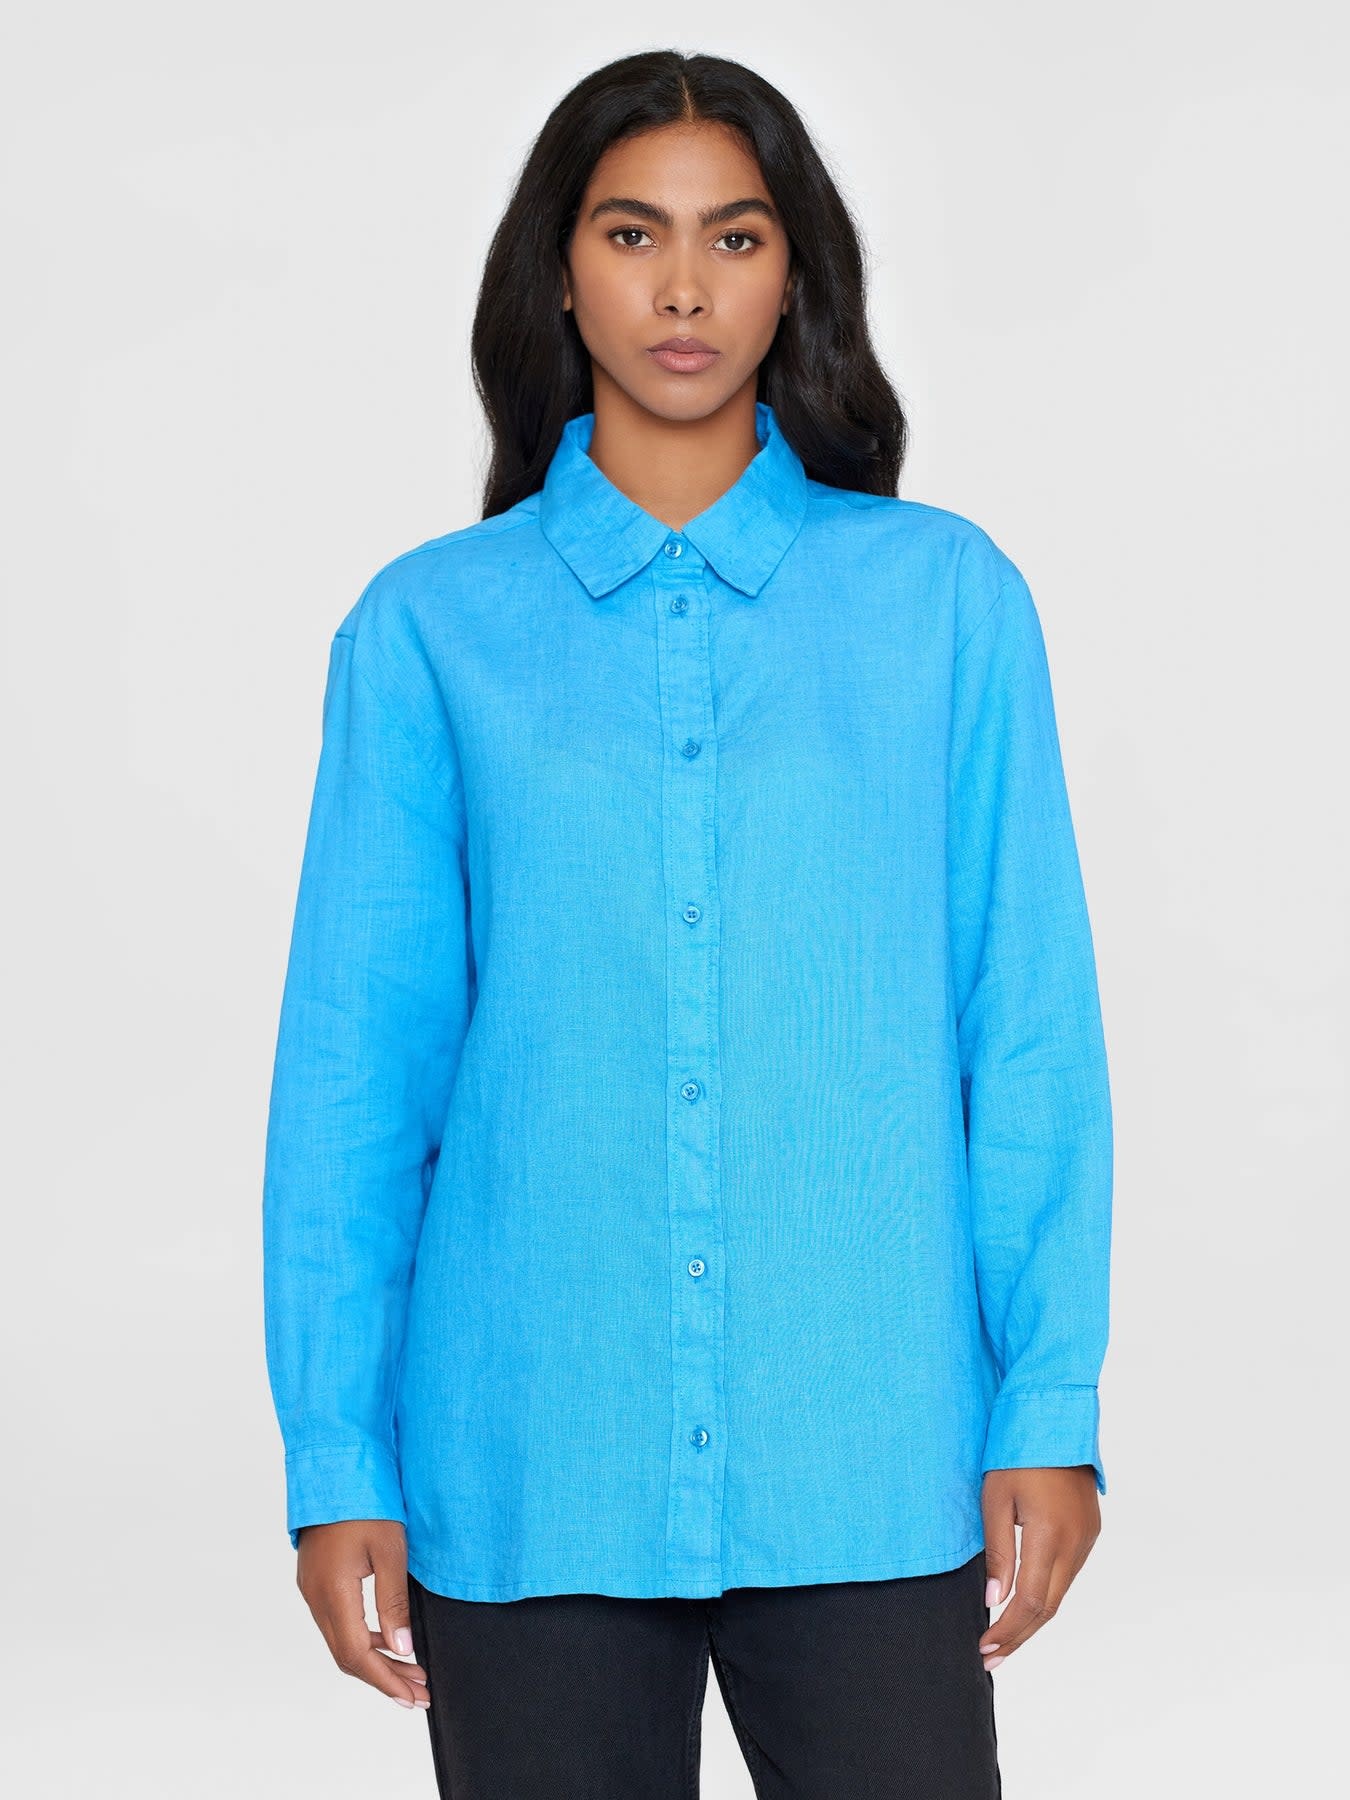 KnowledgeCotton Apparel KnowledgeCotton, Loose Linen Shirt, malibu blue, XS